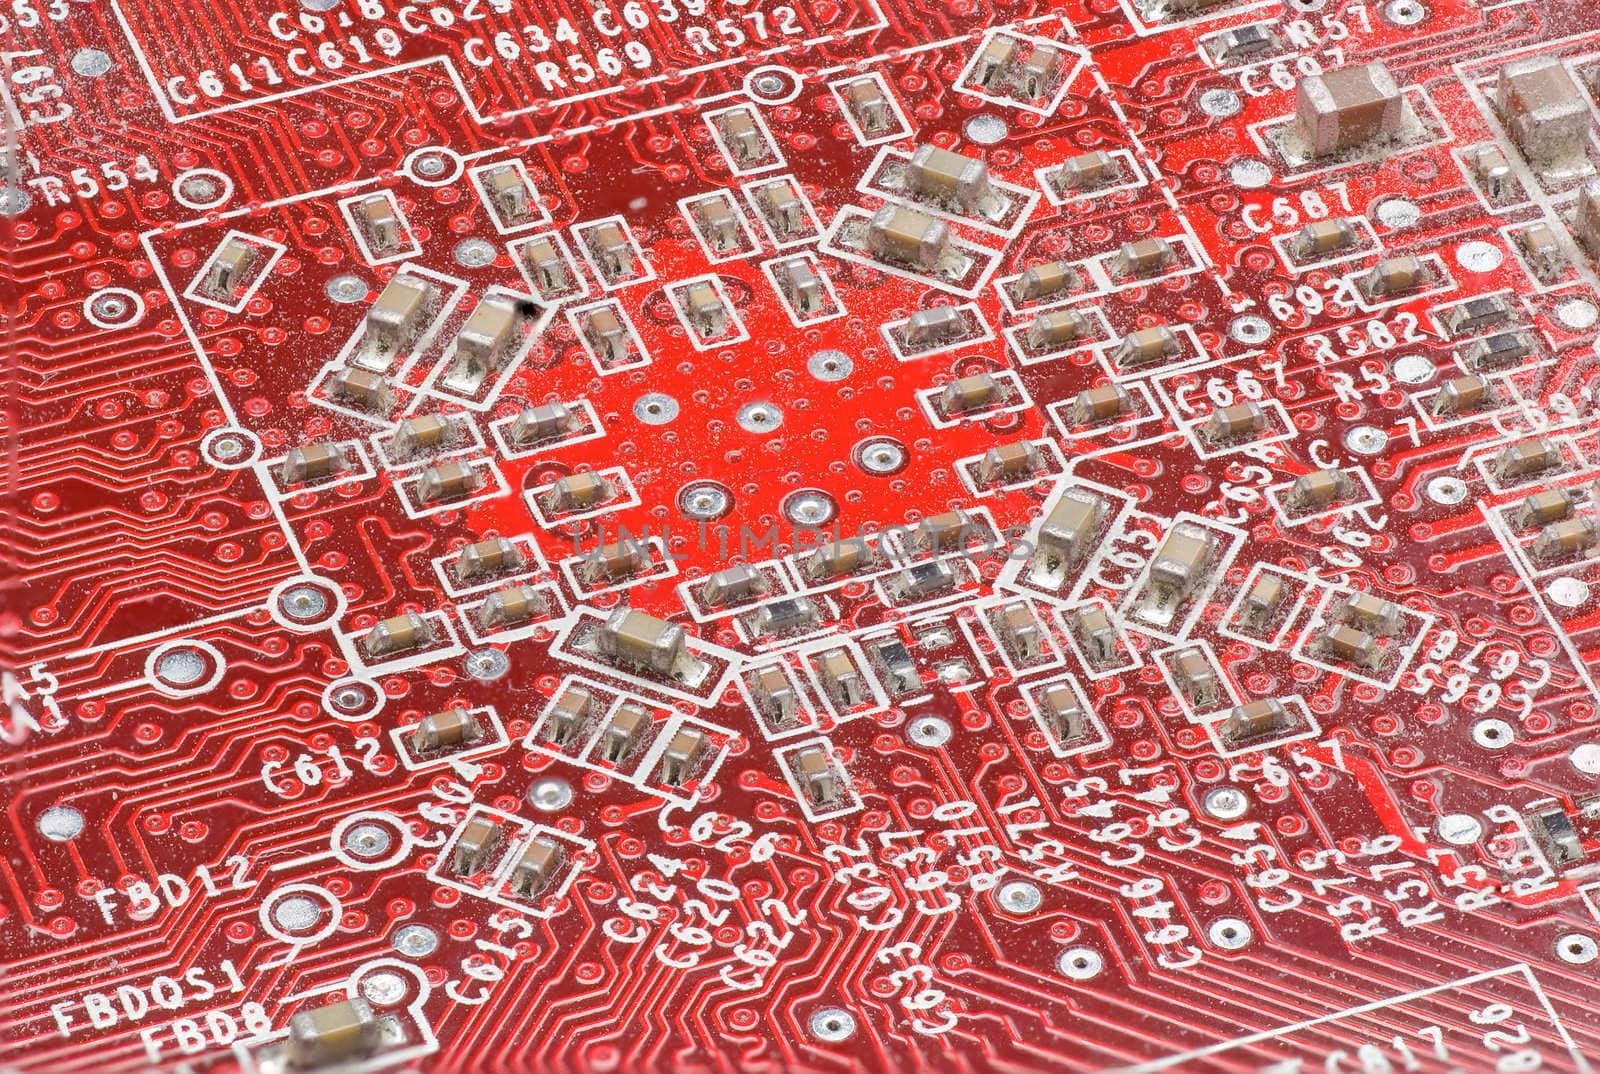 Red dusty circuit board